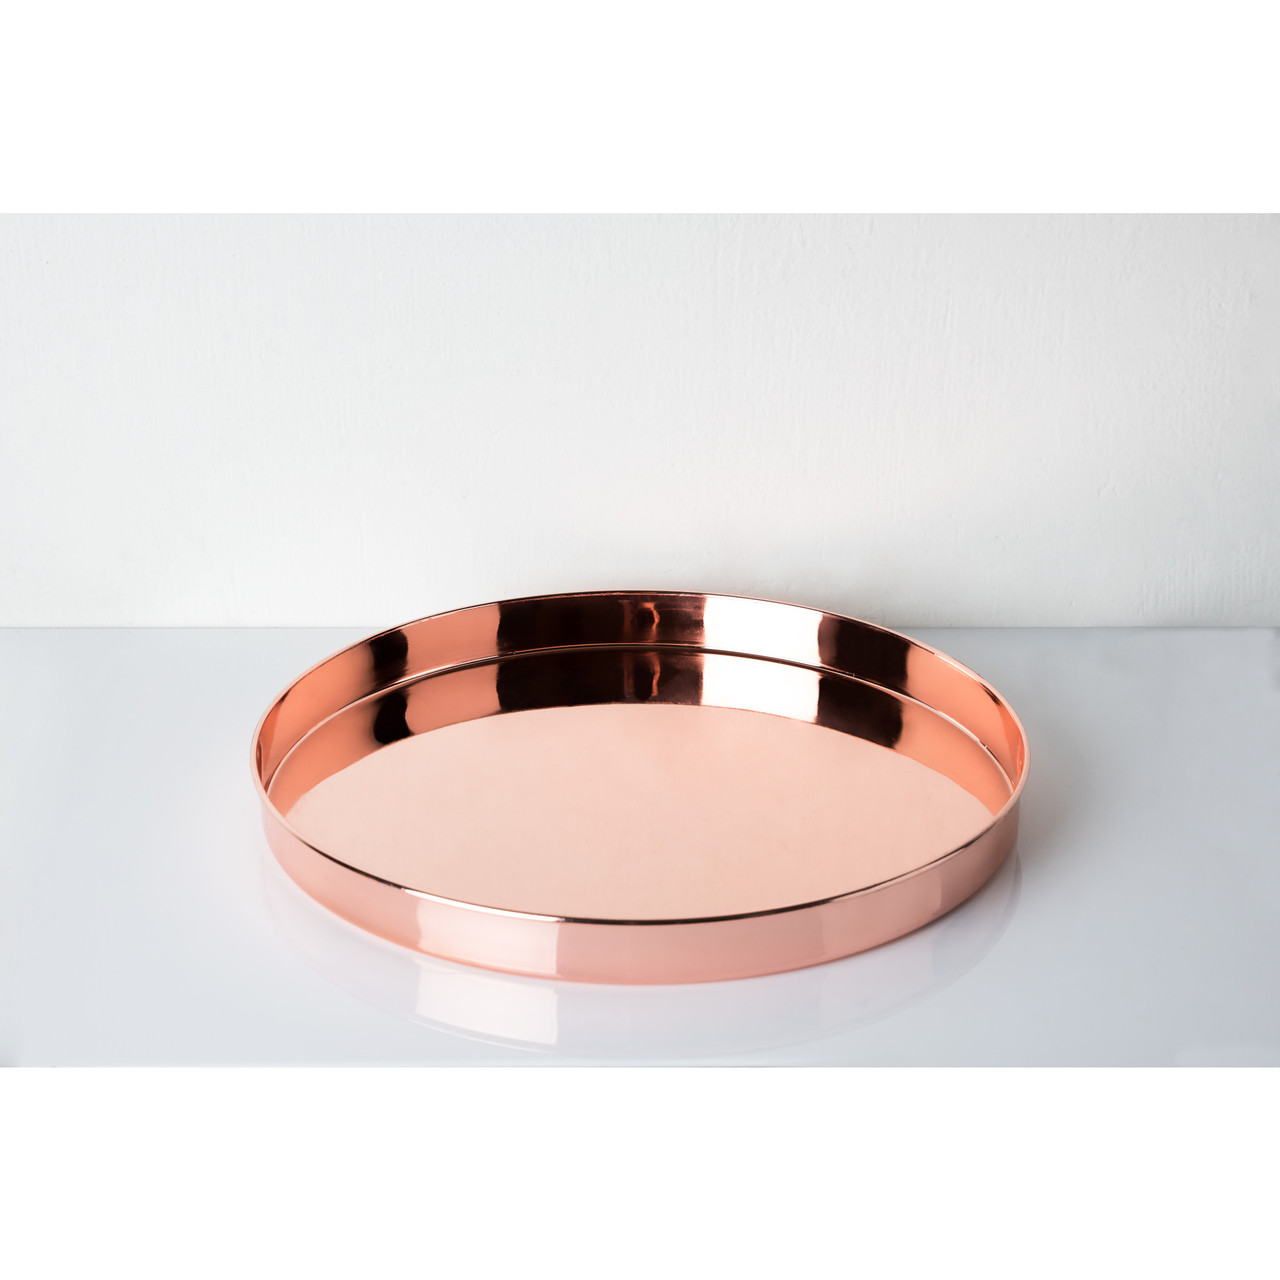 Round Copper Serving Tray by Viski®